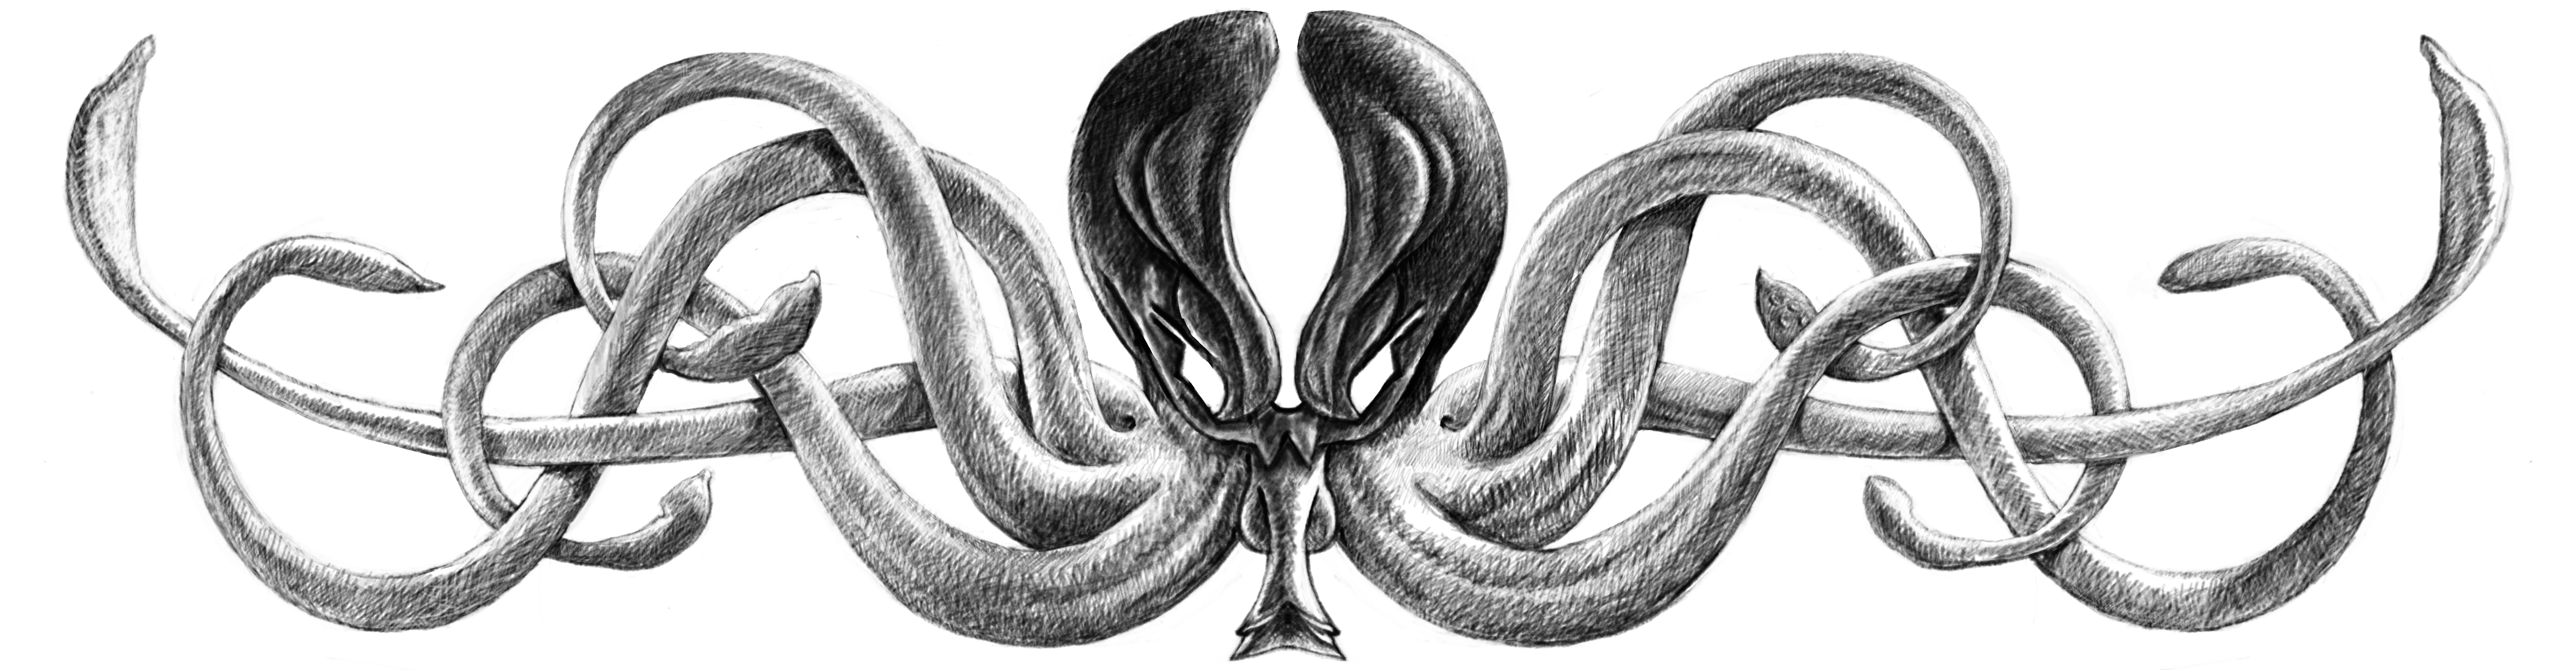 Kraken svg #8, Download drawings